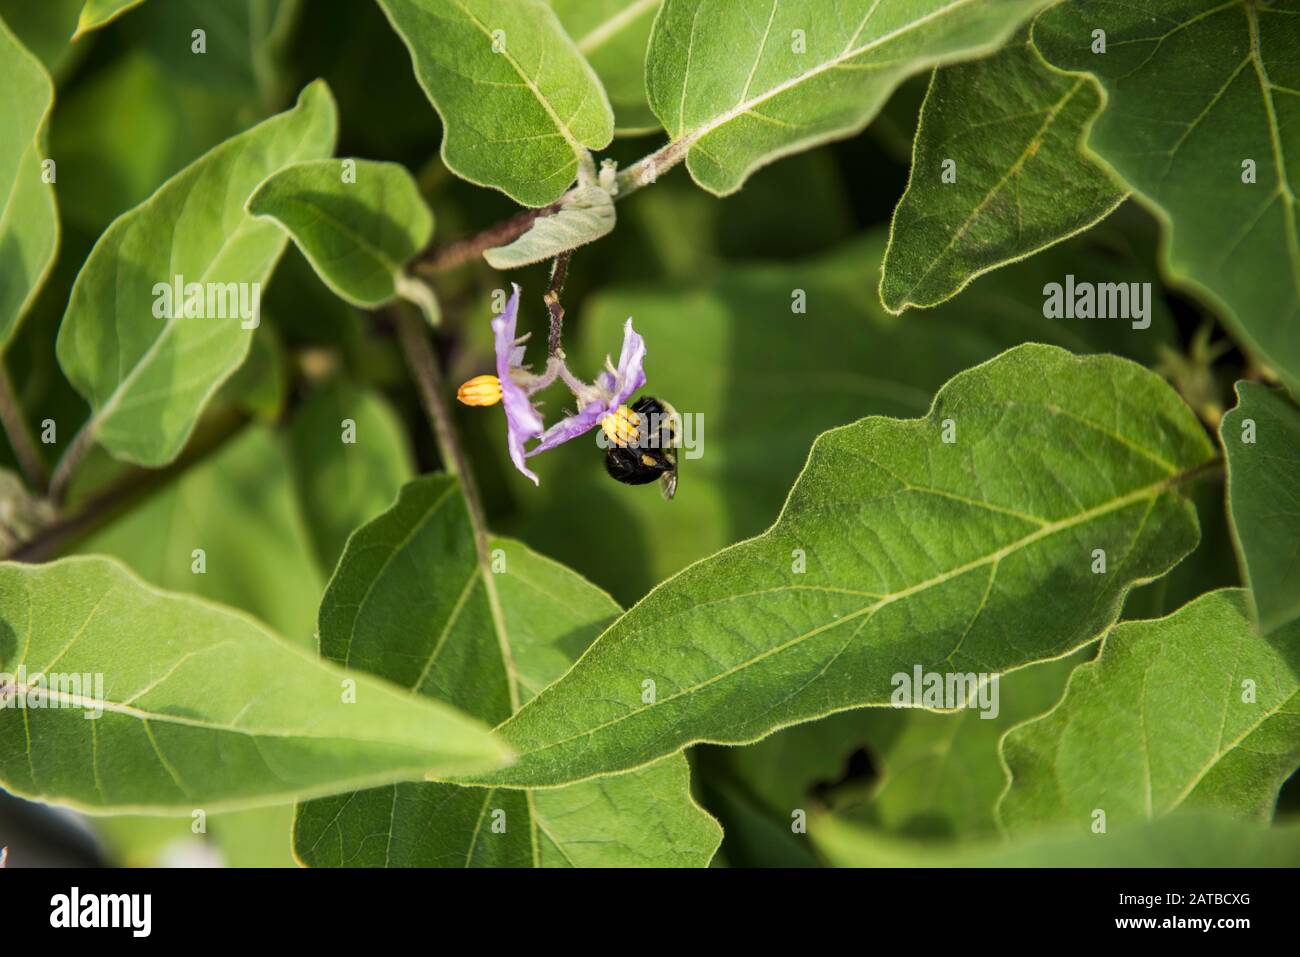 Bumble bee sitting on eggplant flower Stock Photo